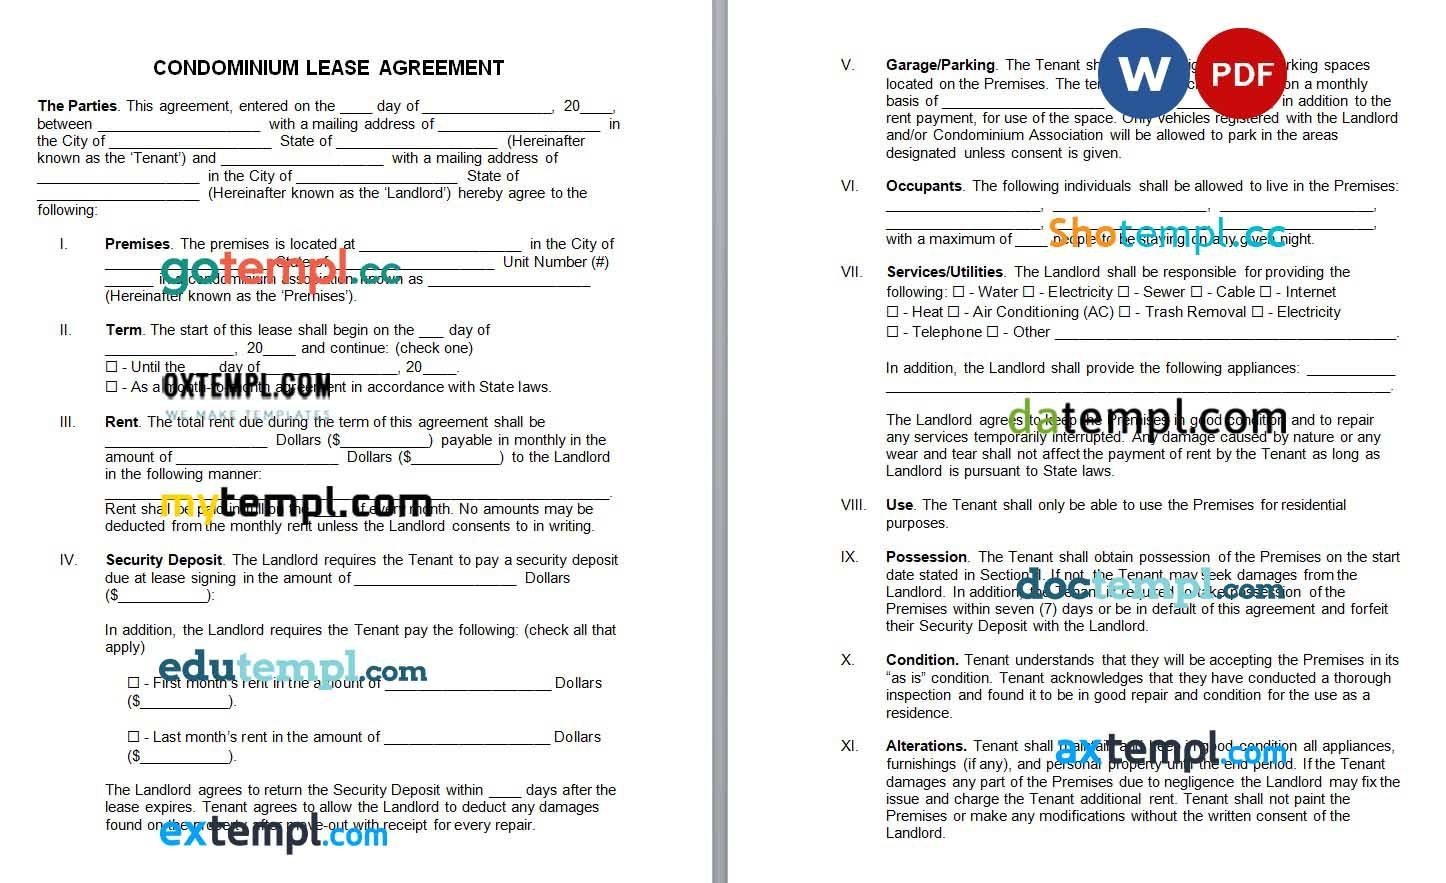 Condominium Lease Agreement Word example, fully editable